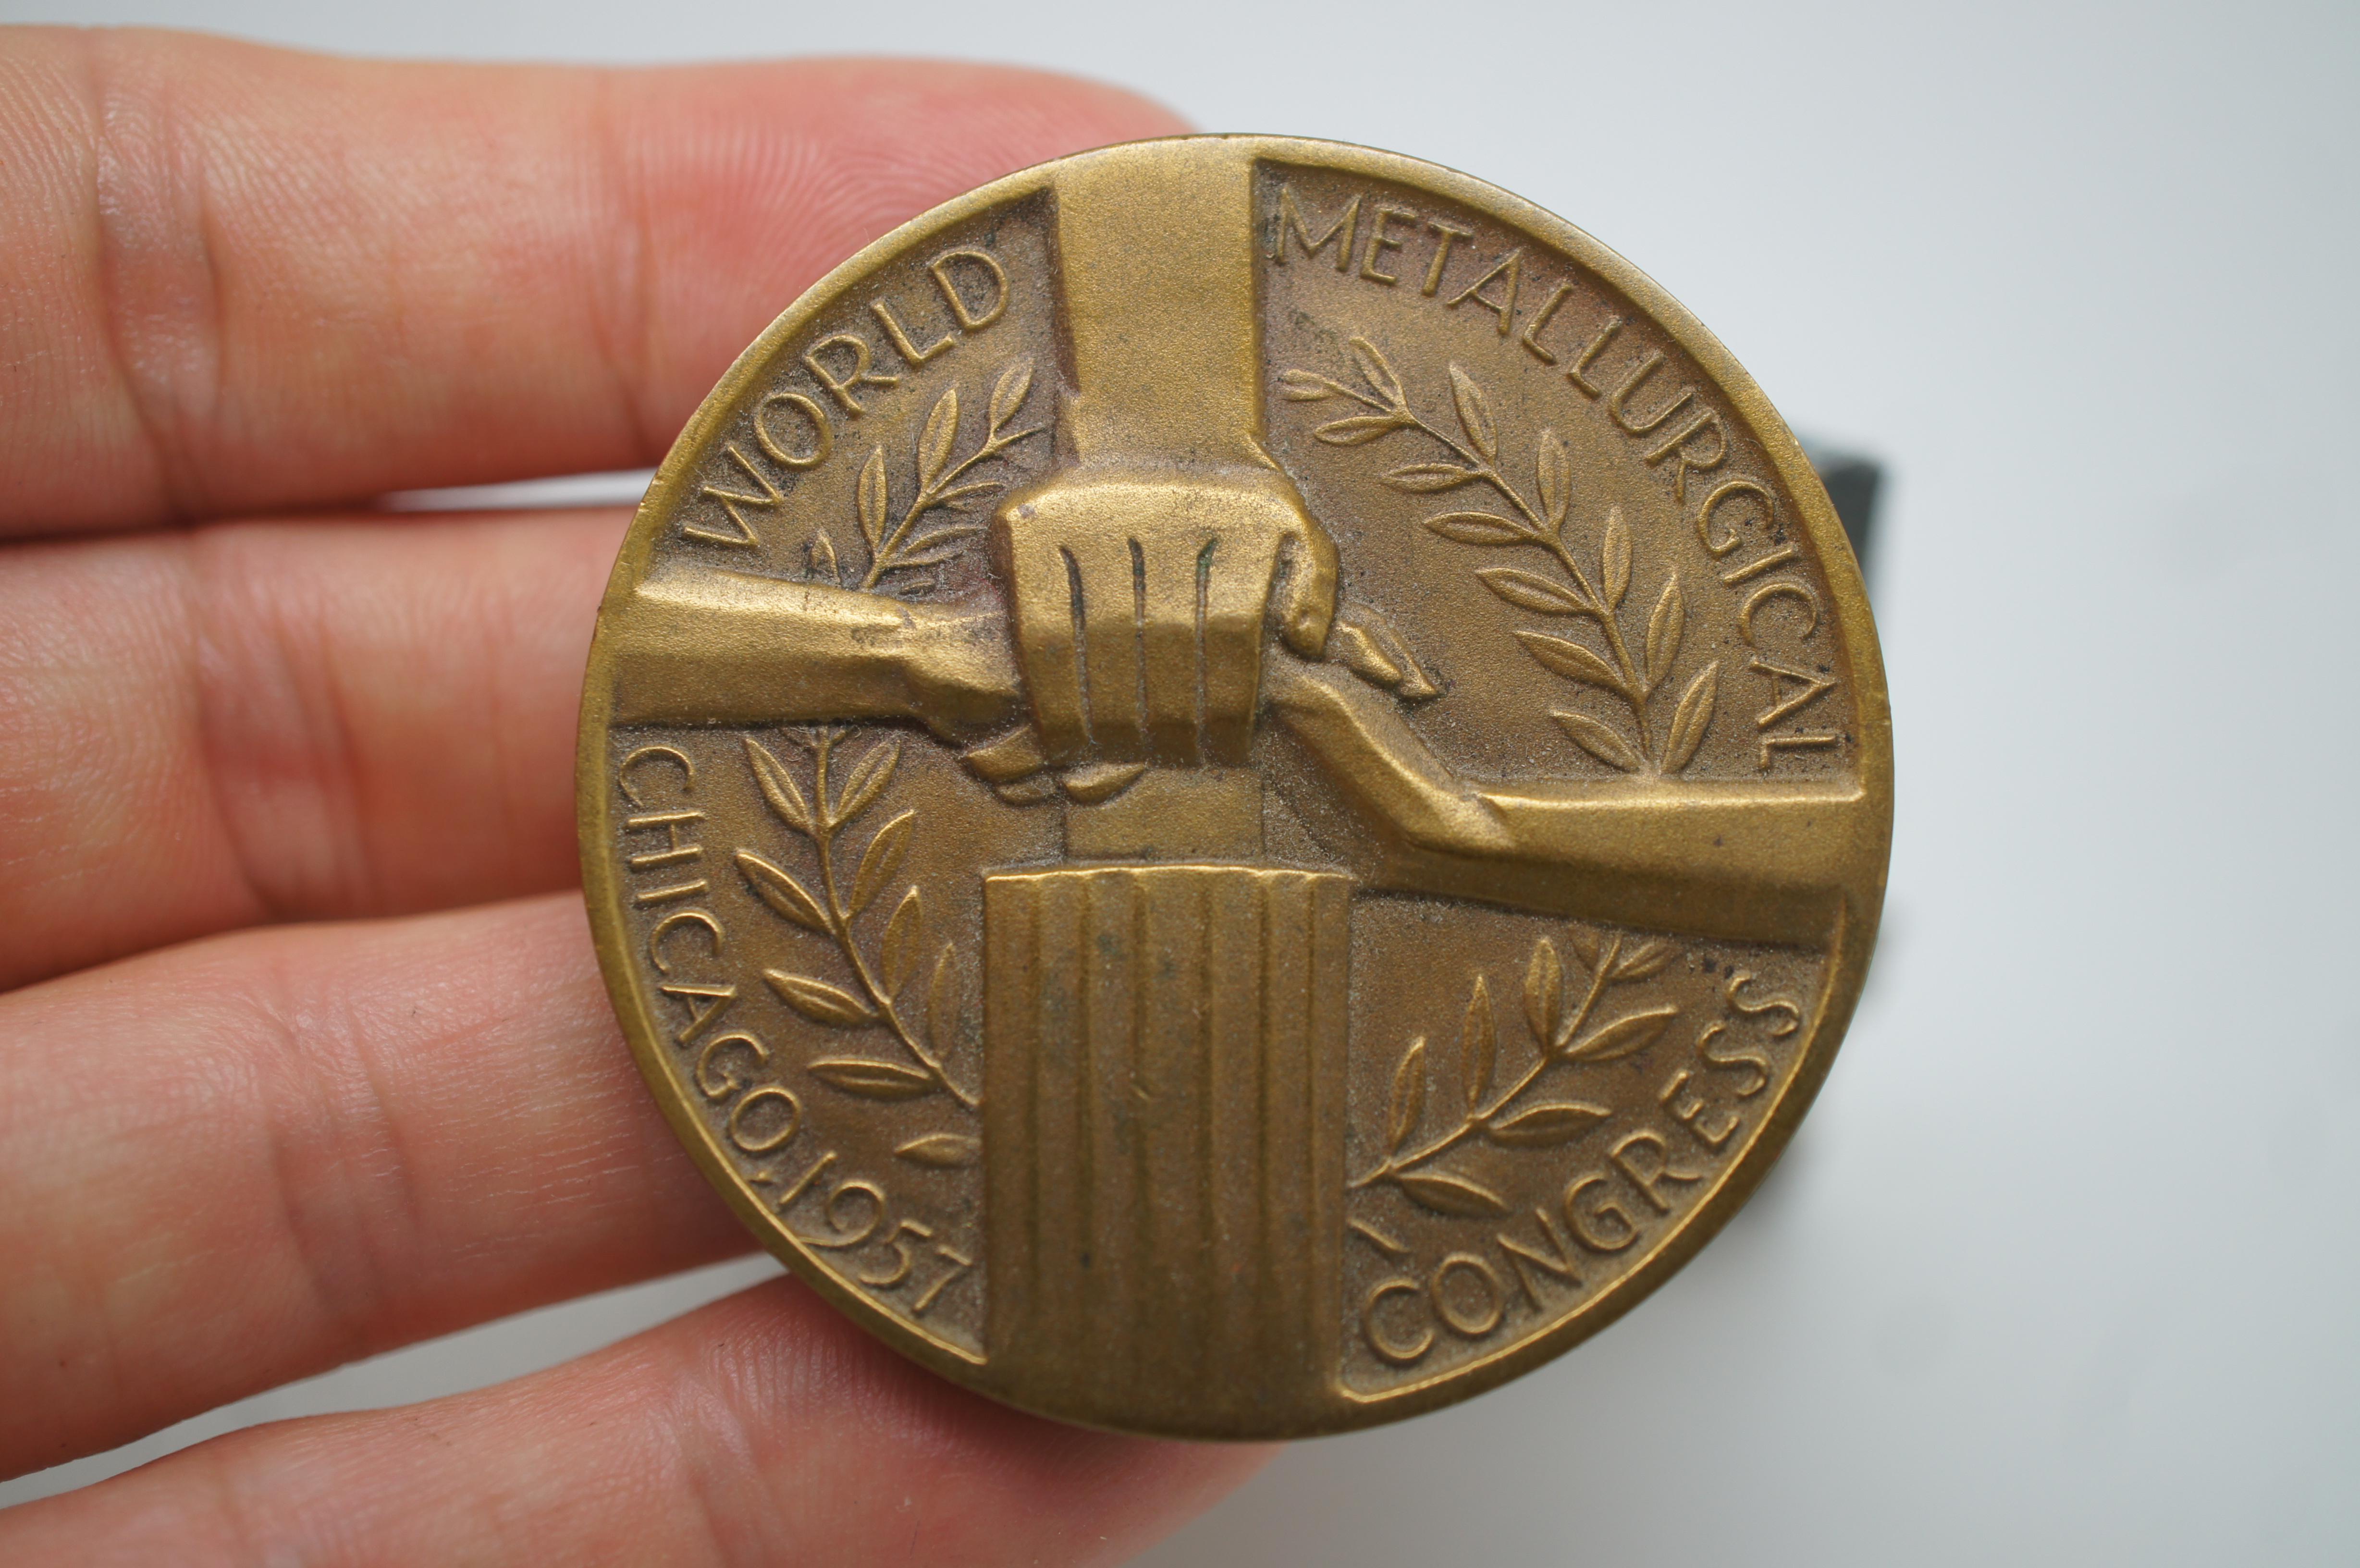 Vintage 1957 Chicago World Metallurgical Congress Brass Medal Badge Pin 4.5